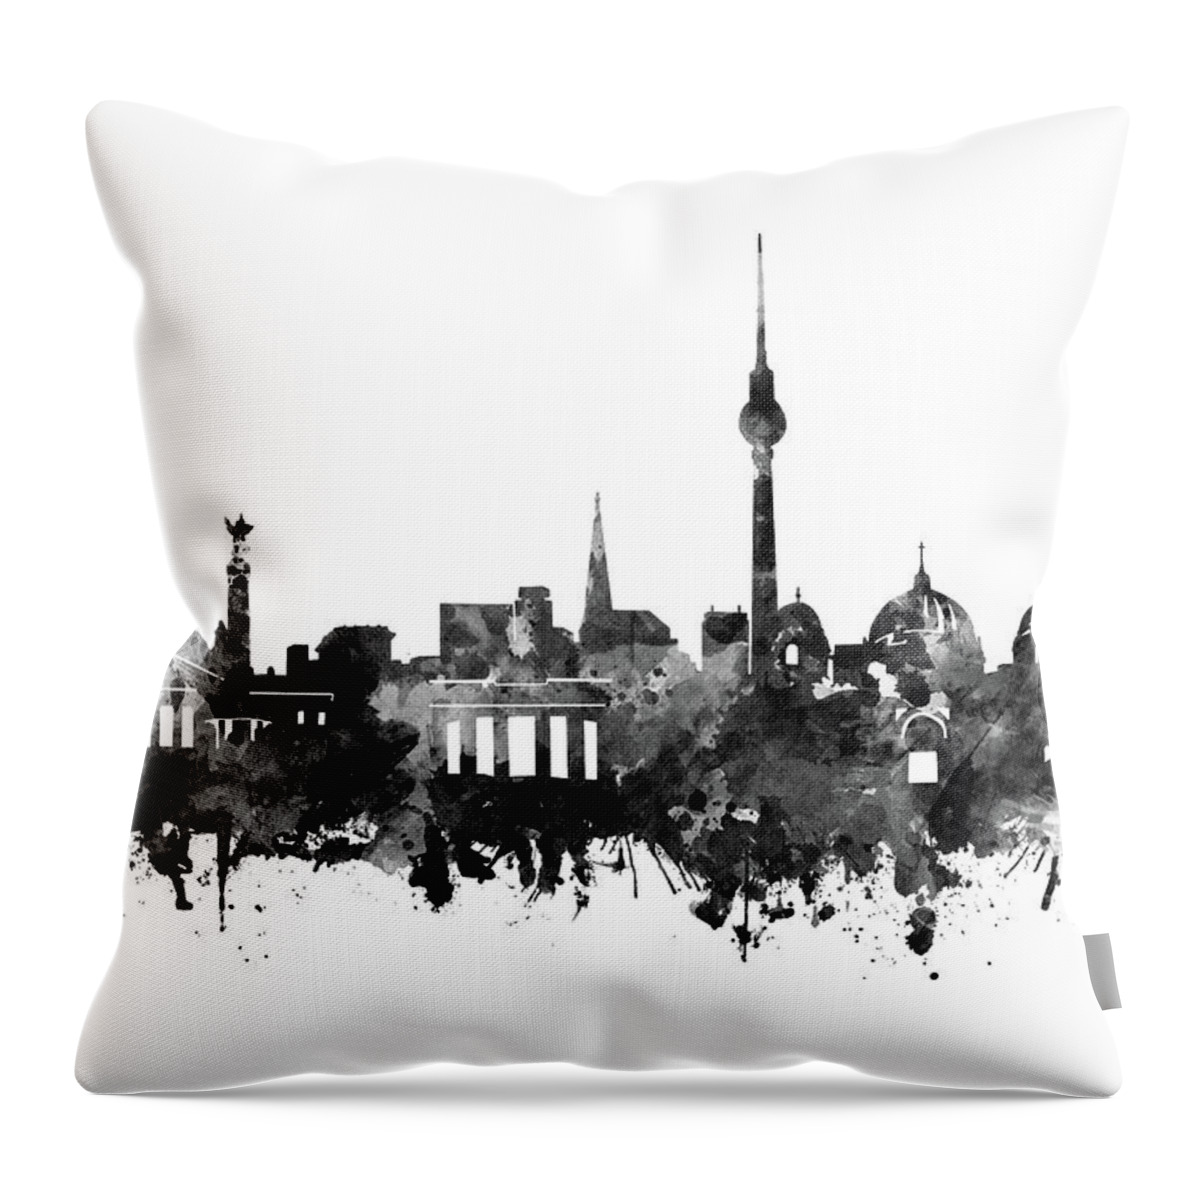 Berlin Throw Pillow featuring the digital art Berlin City Skyline Black And White by Bekim M